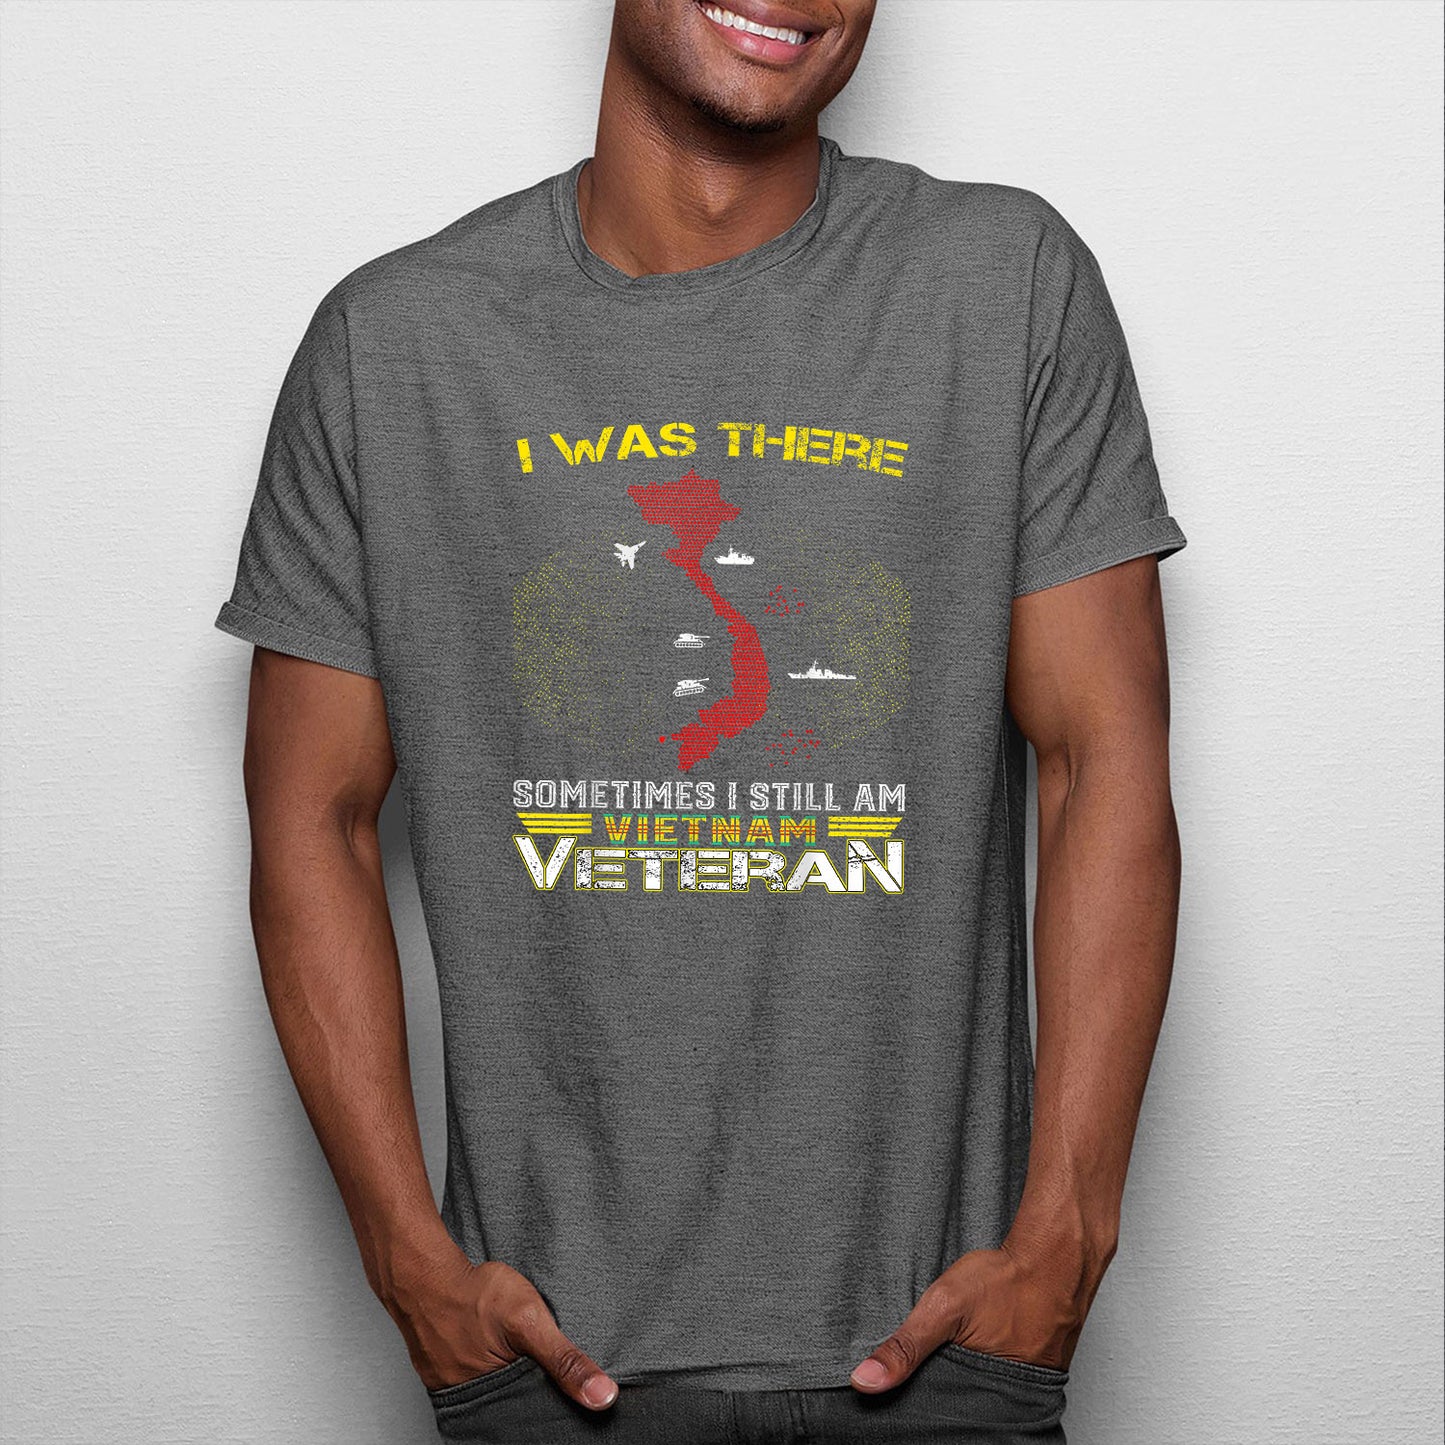 Memorial Day 2021 Vietnam Veteran T Shirts, I WAS THERE SOMETIMES I STILL AM VIETNAM VETERAN T shirt For Men, Cotton Shirt, Air Force Memorial Shirt, Usaf T Shirt